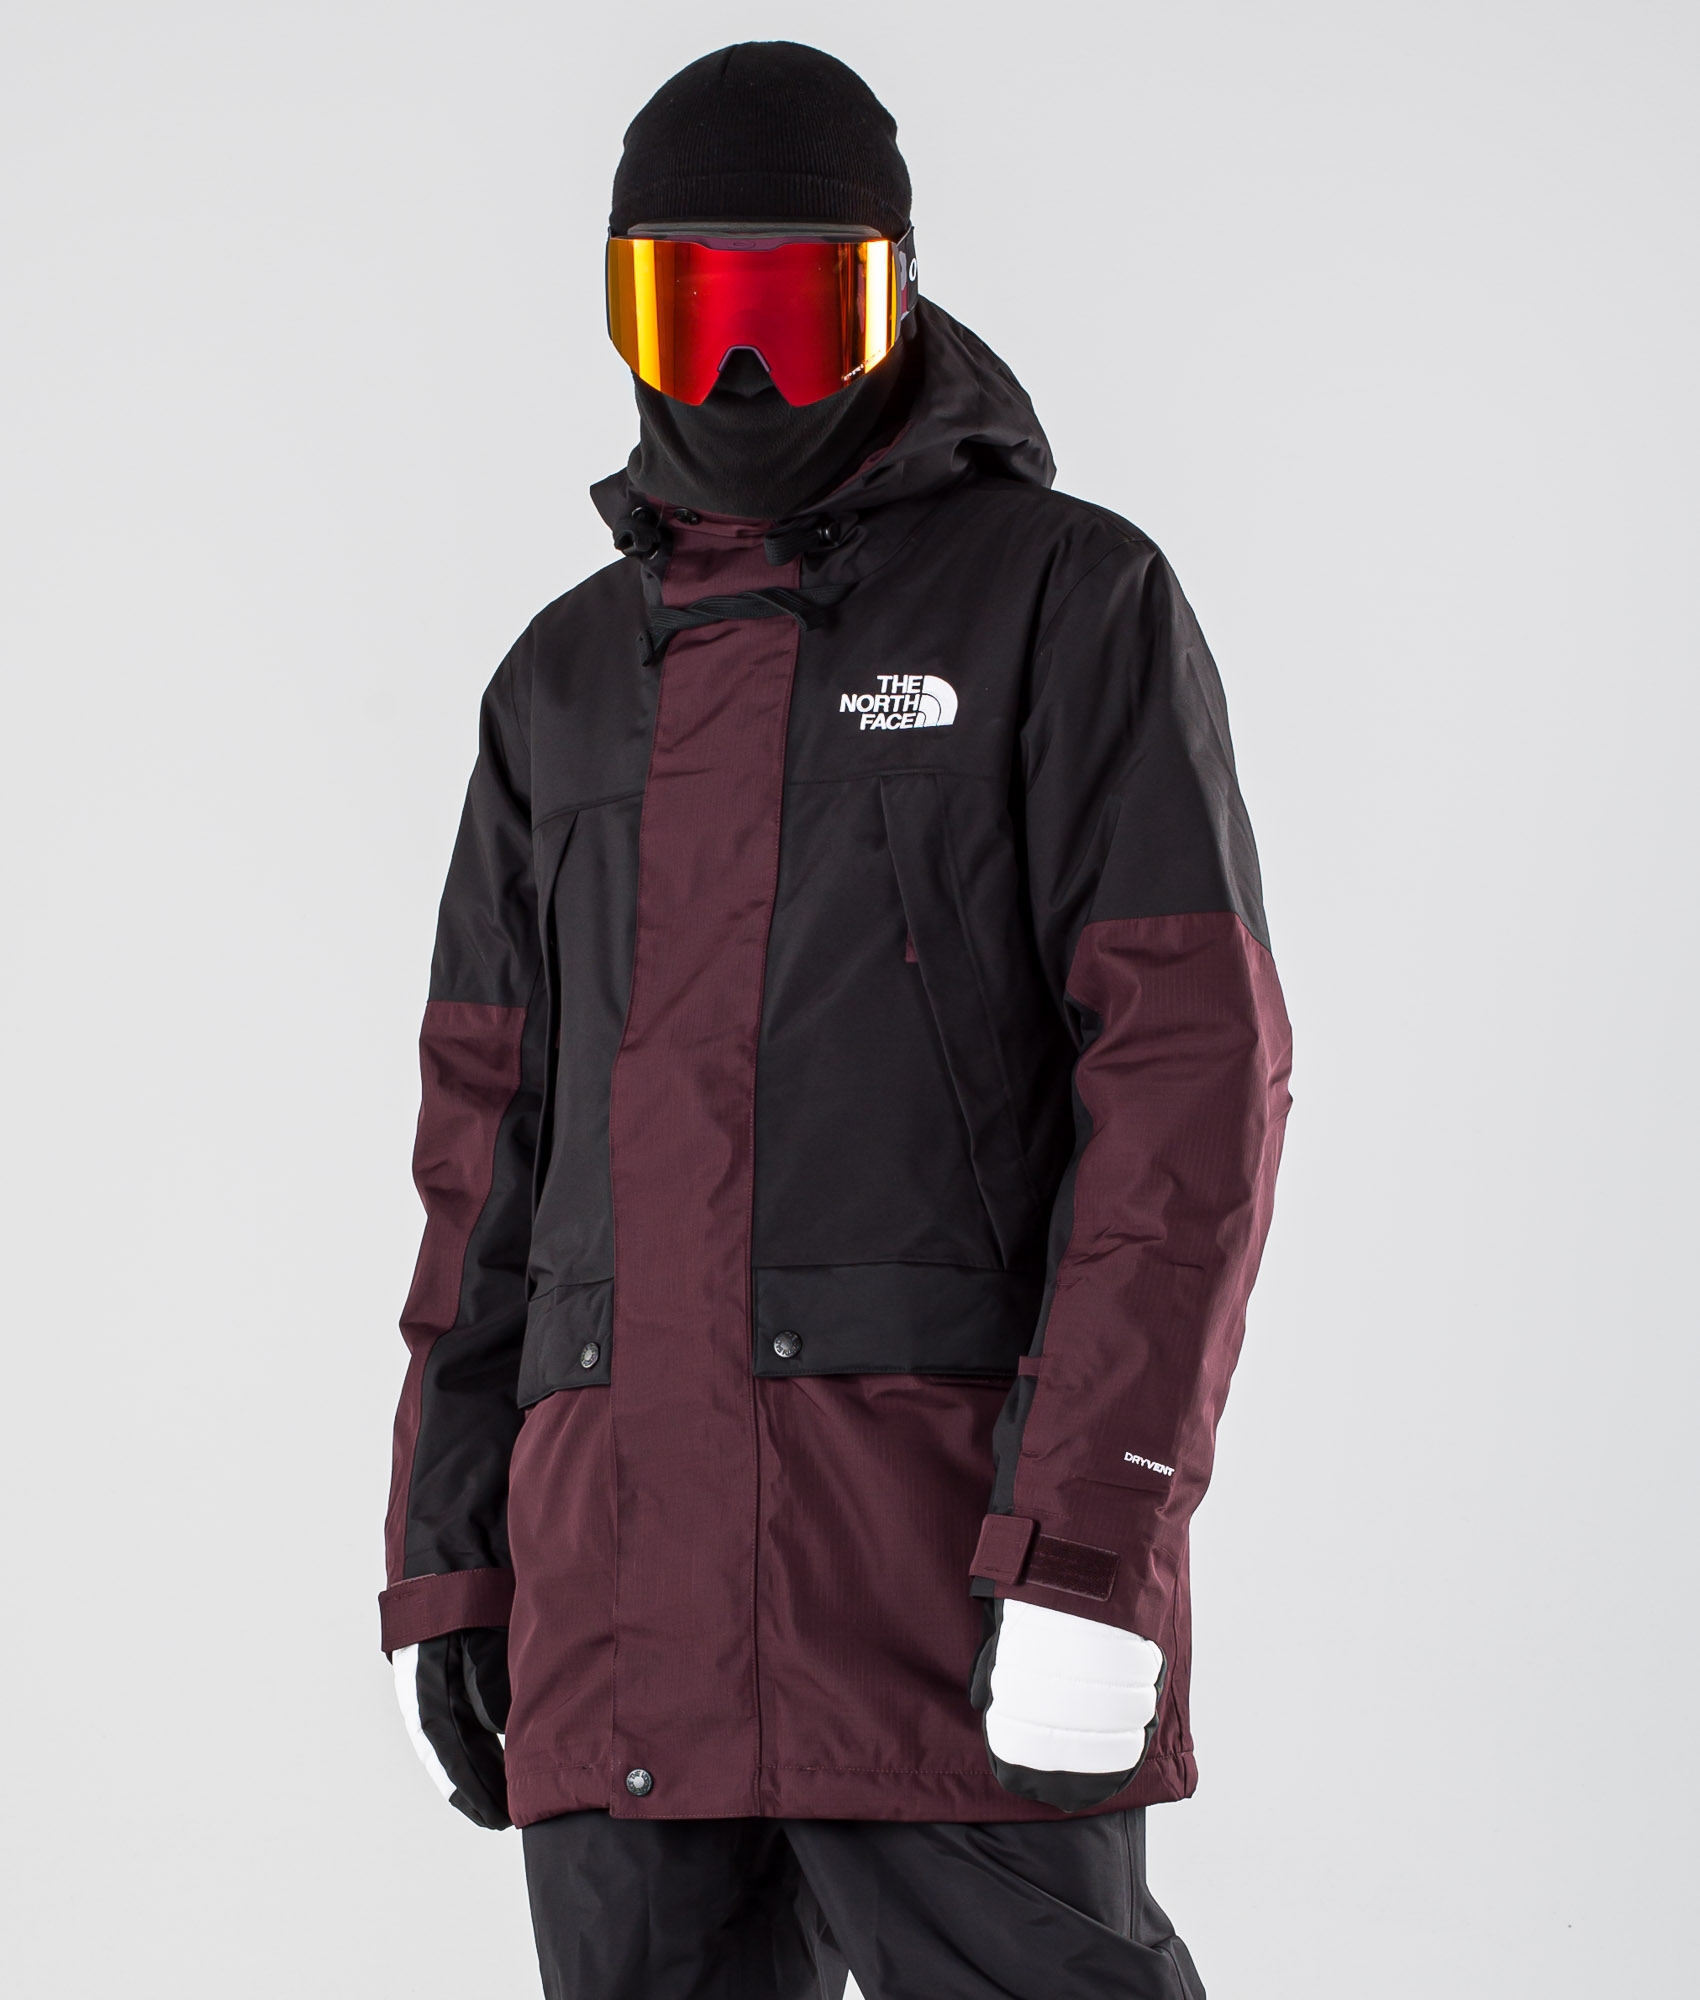 north face ski jacket